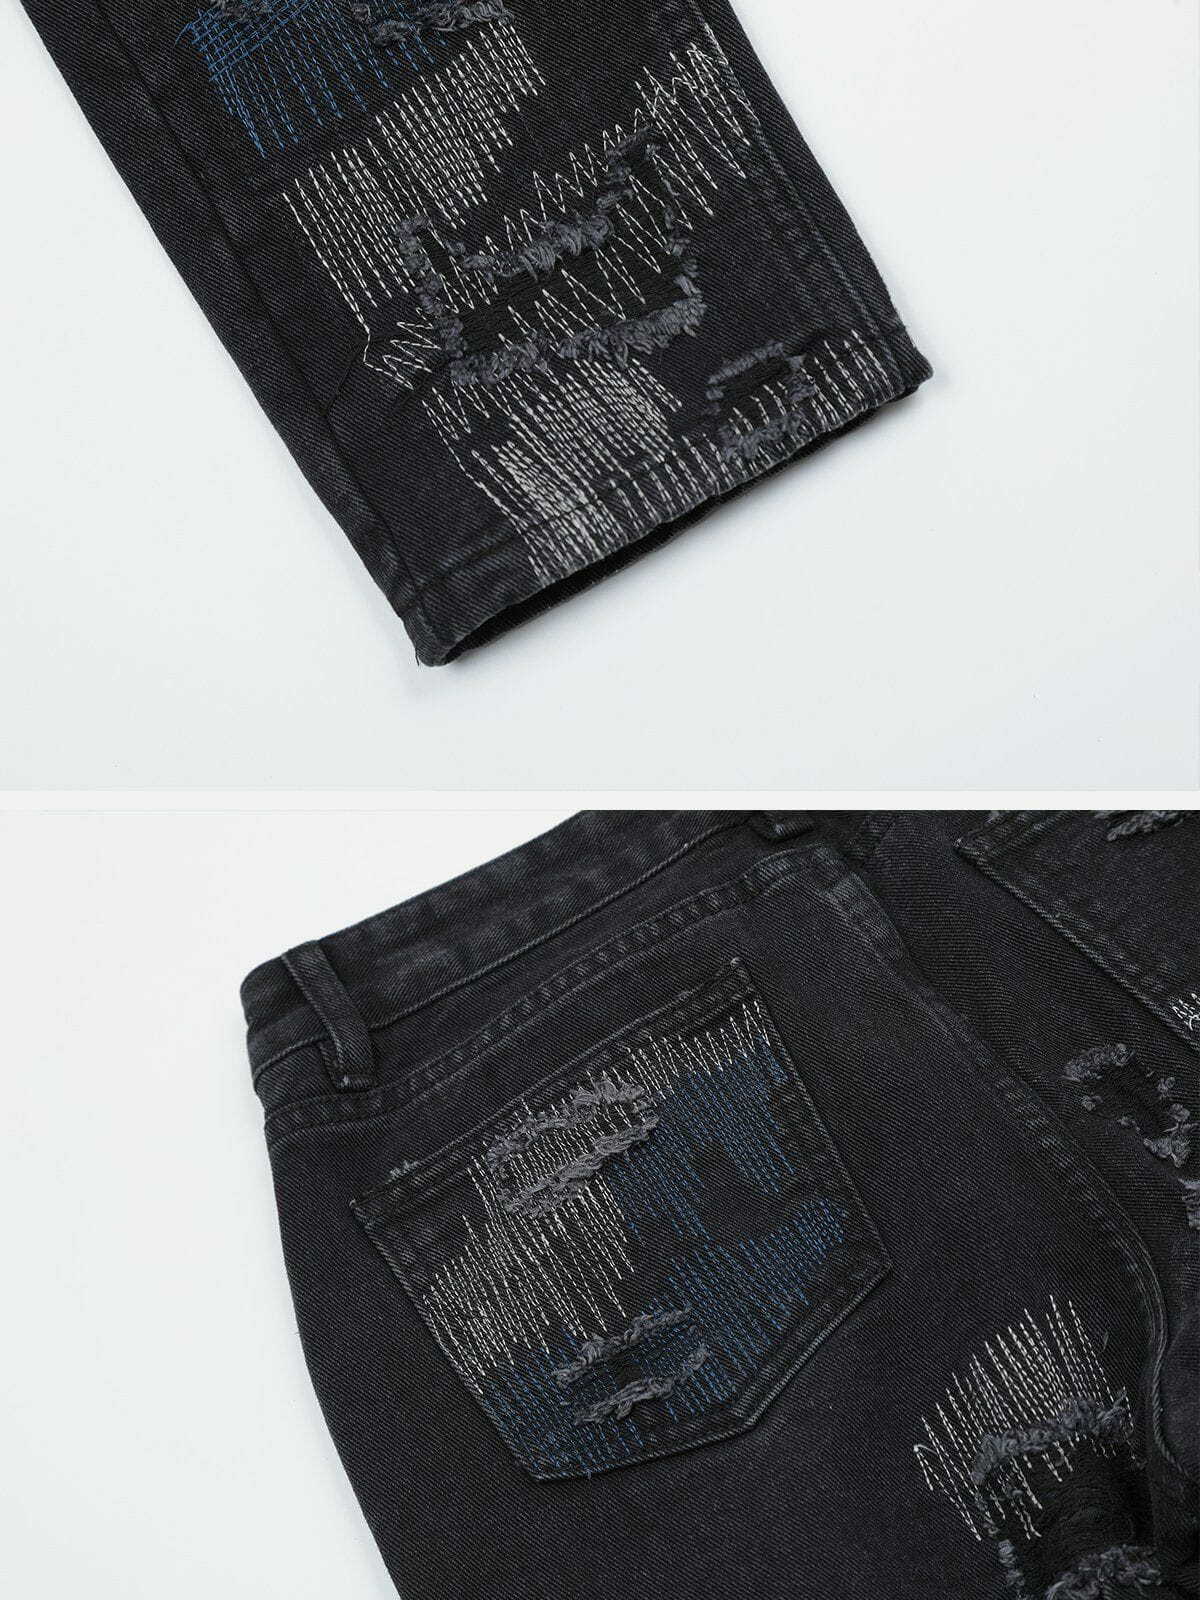 revolutionary patchwork embroidered jeans edgy & irregular design 7738